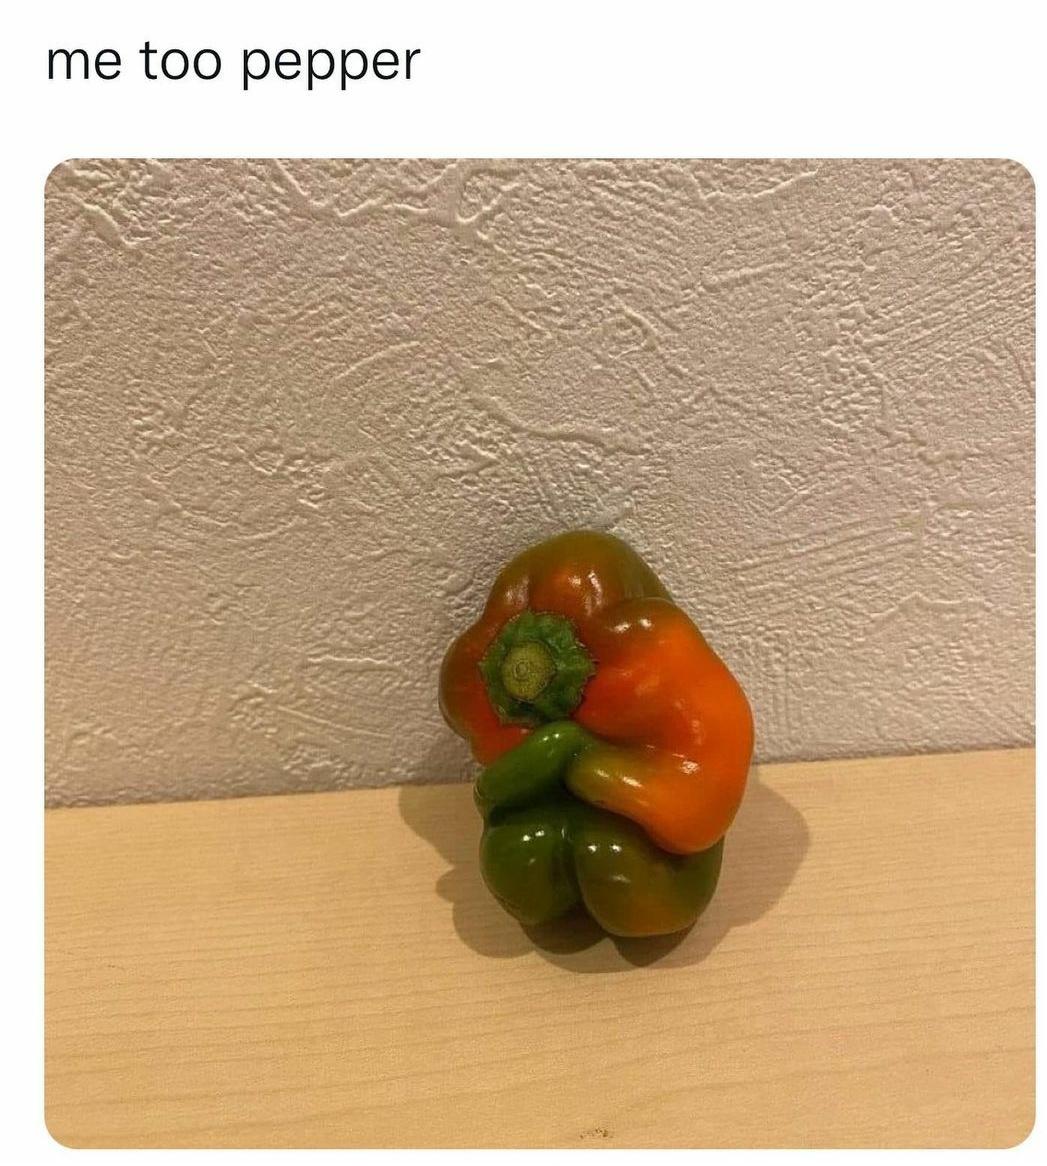 peppers - me too pepper 22